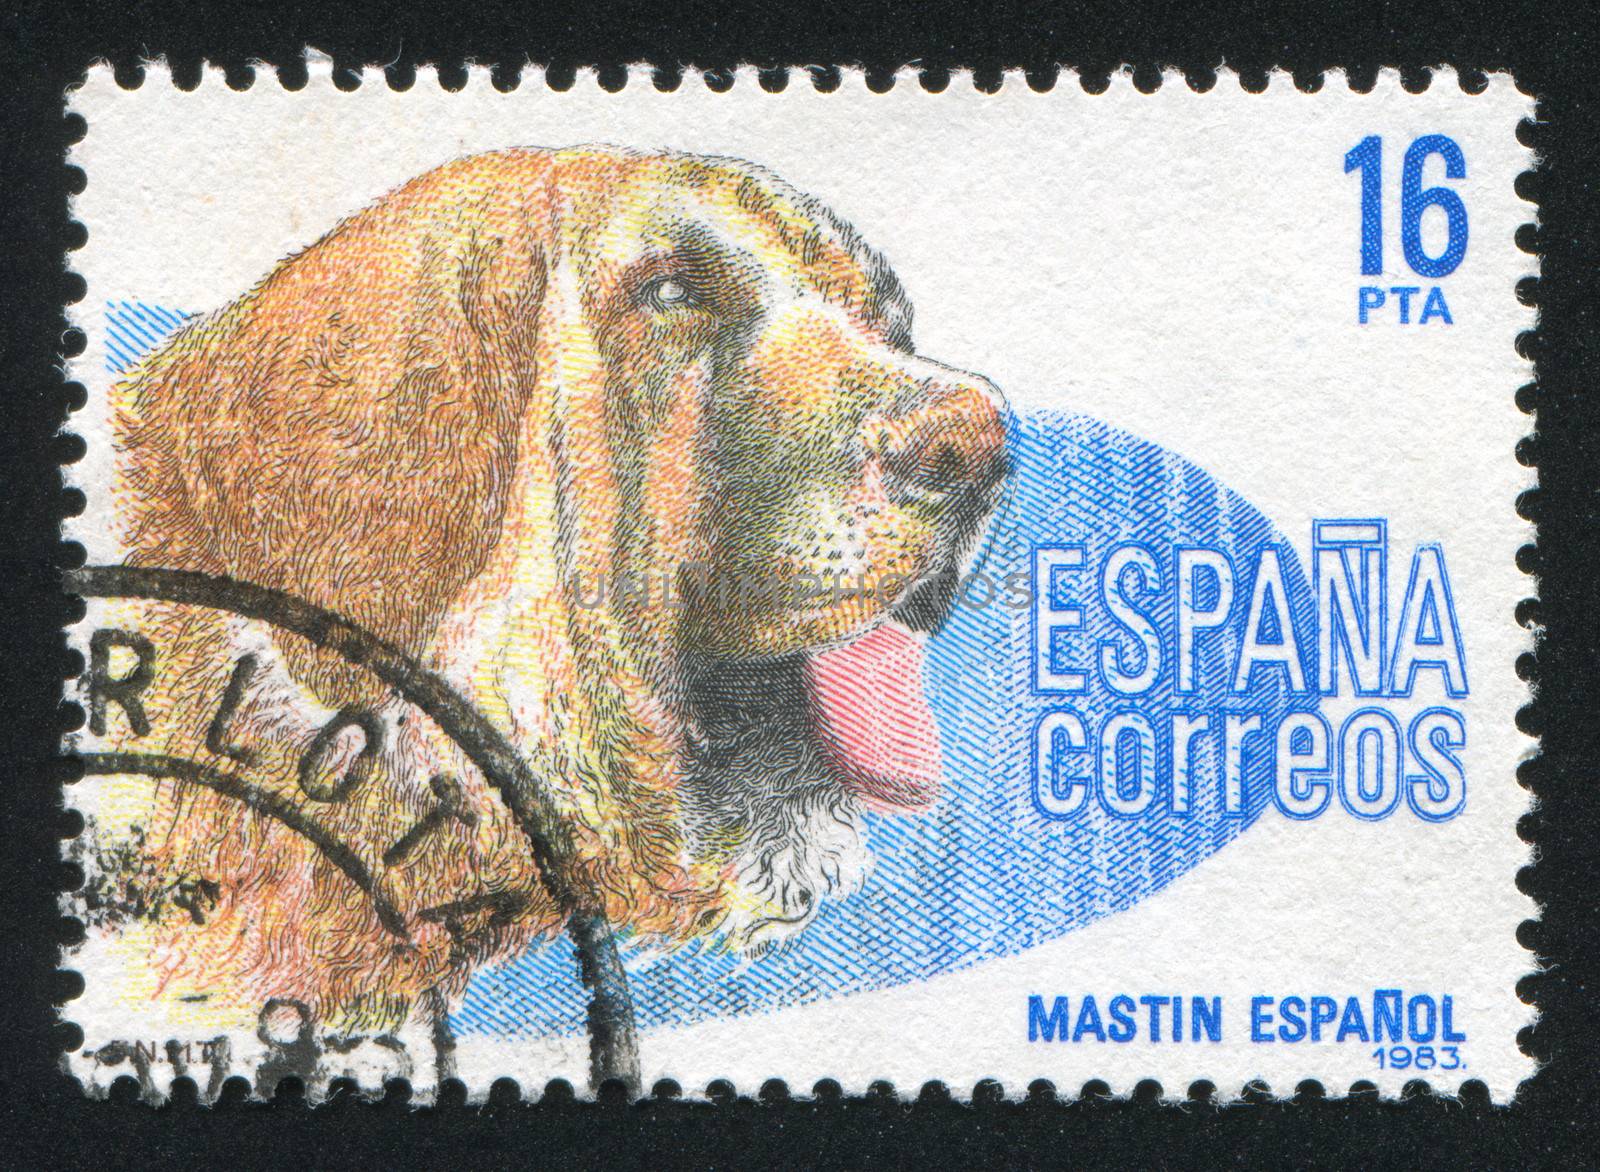 SPAIN- CIRCA 1983: stamp printed by Spain, shows Dog, circa 1983